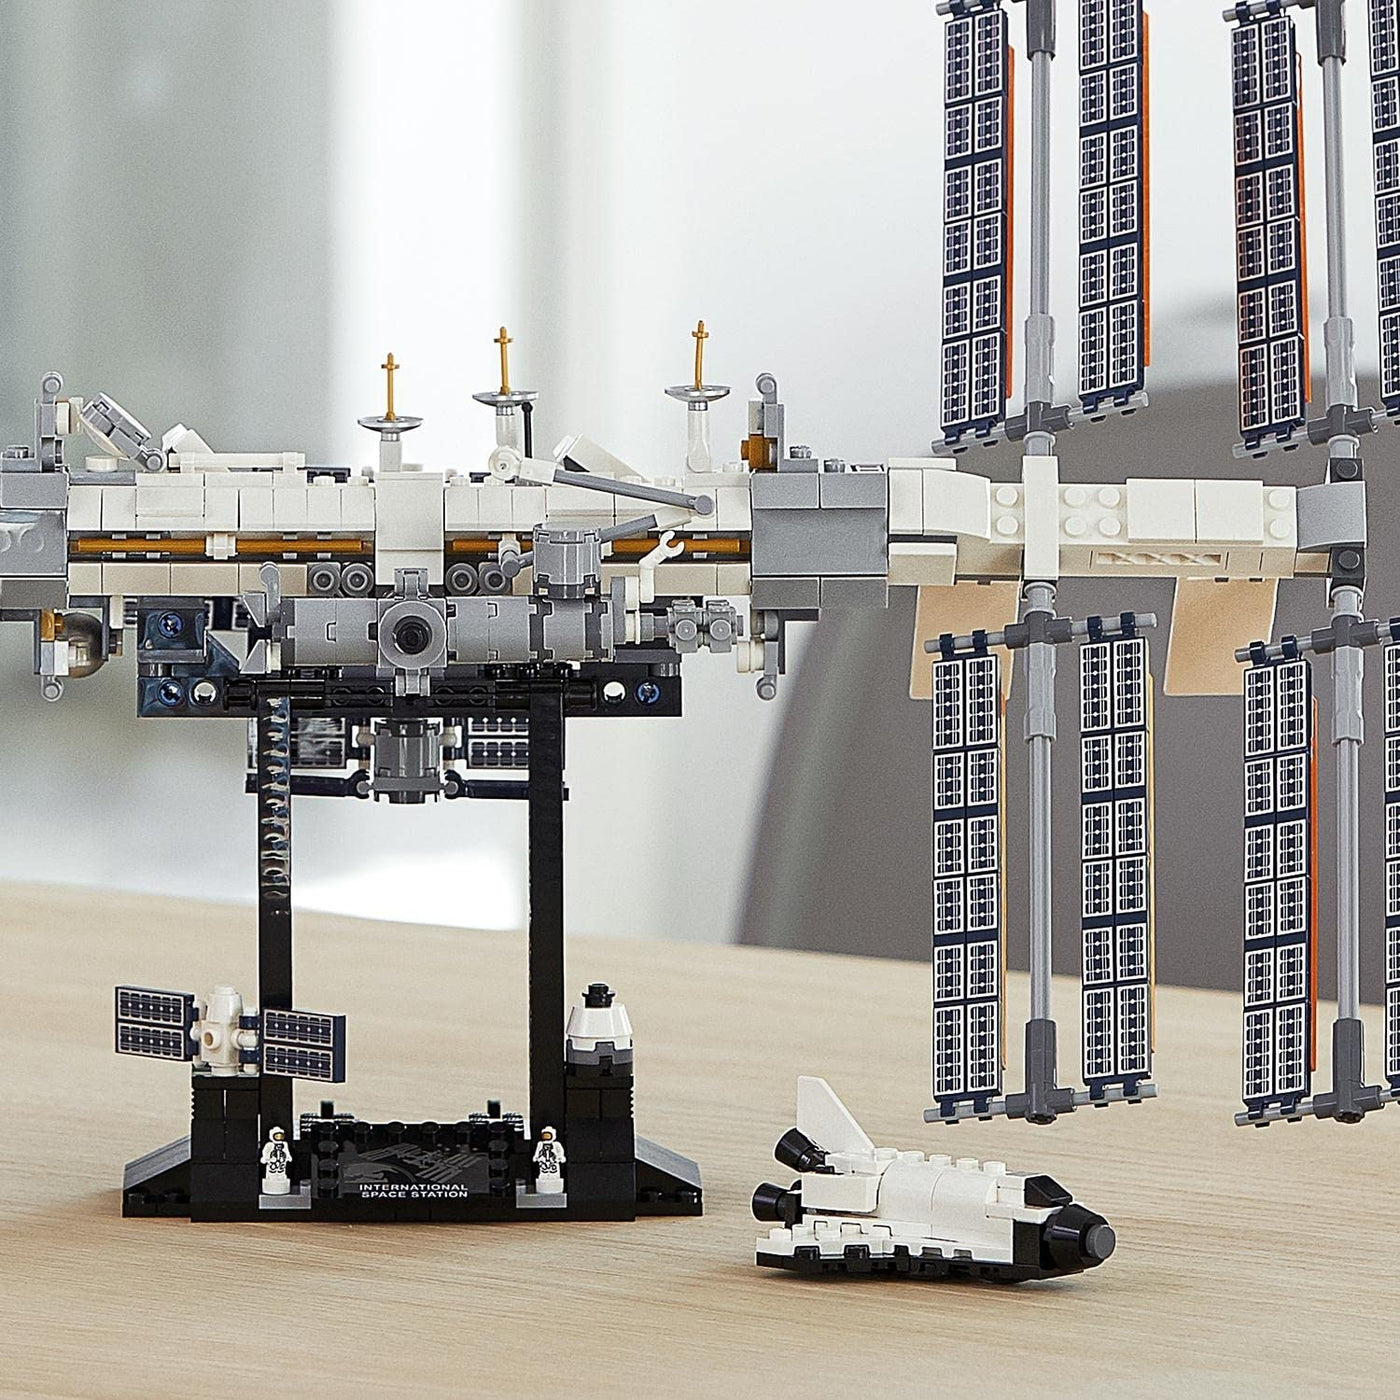 International Space Station: 21321 Ideas - 864 PCS | LEGO®